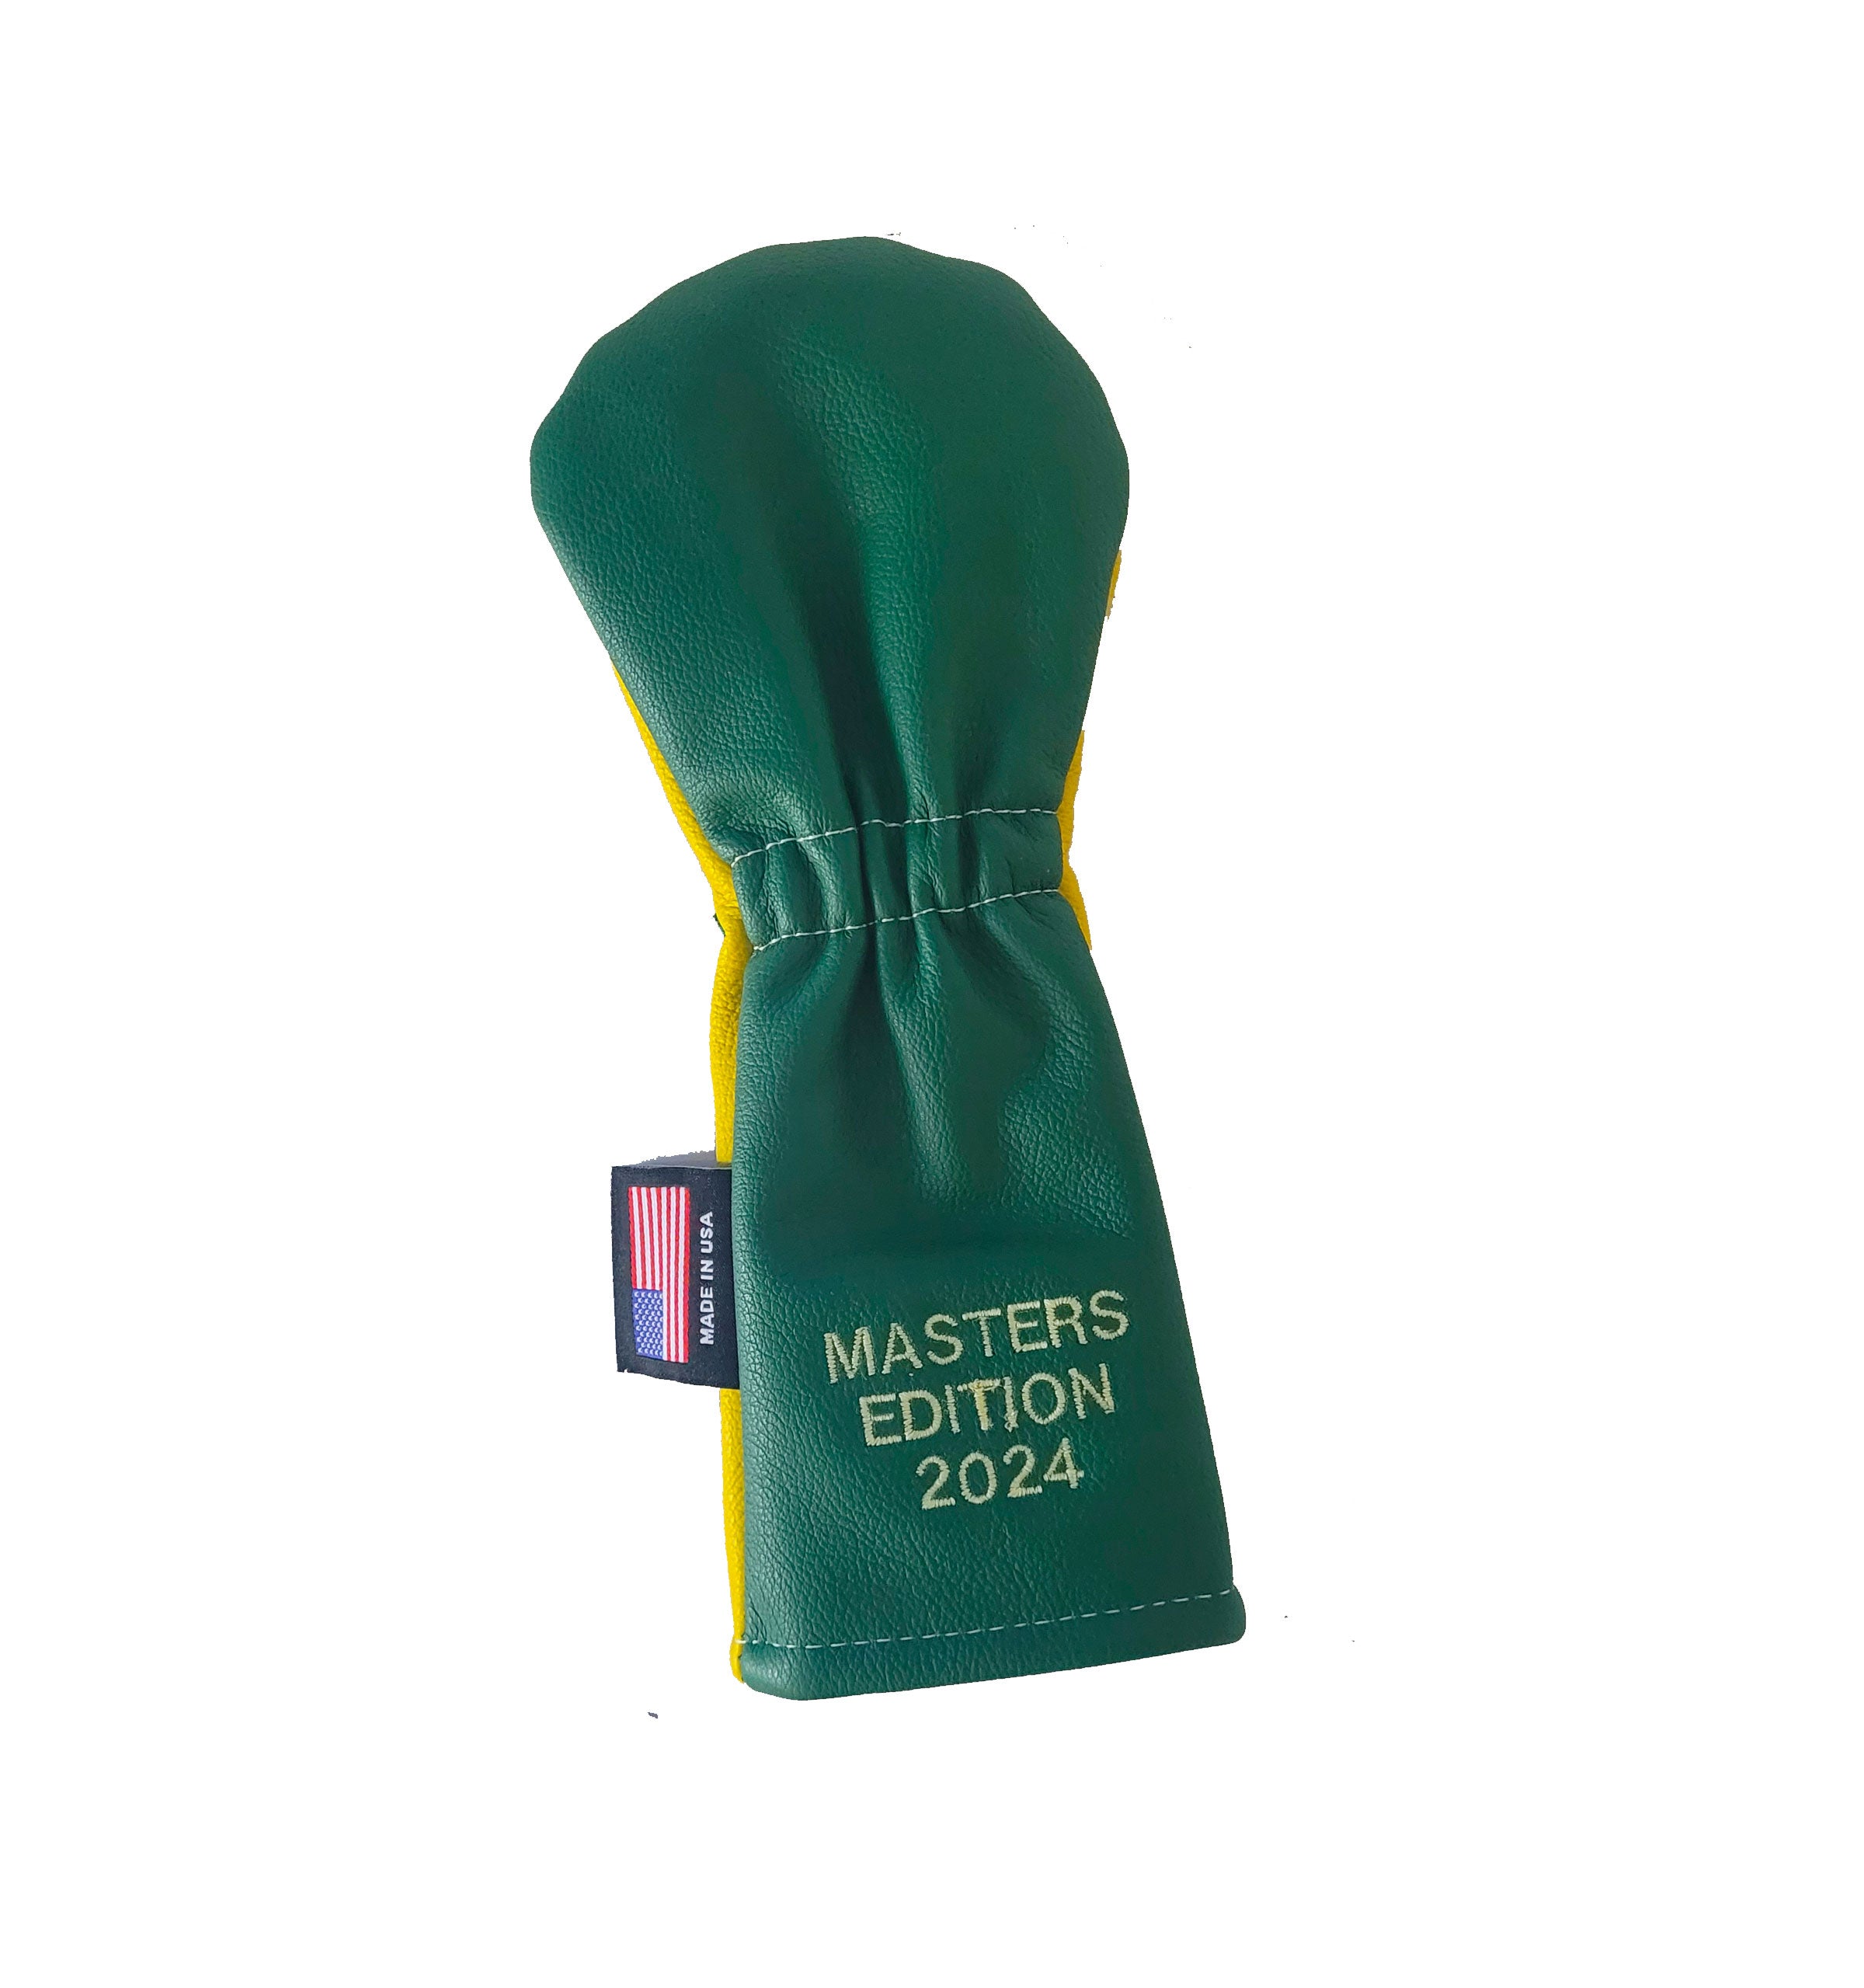 The 2024 Dancing Masters/Augusta Inspired Headcover - Robert Mark Golf